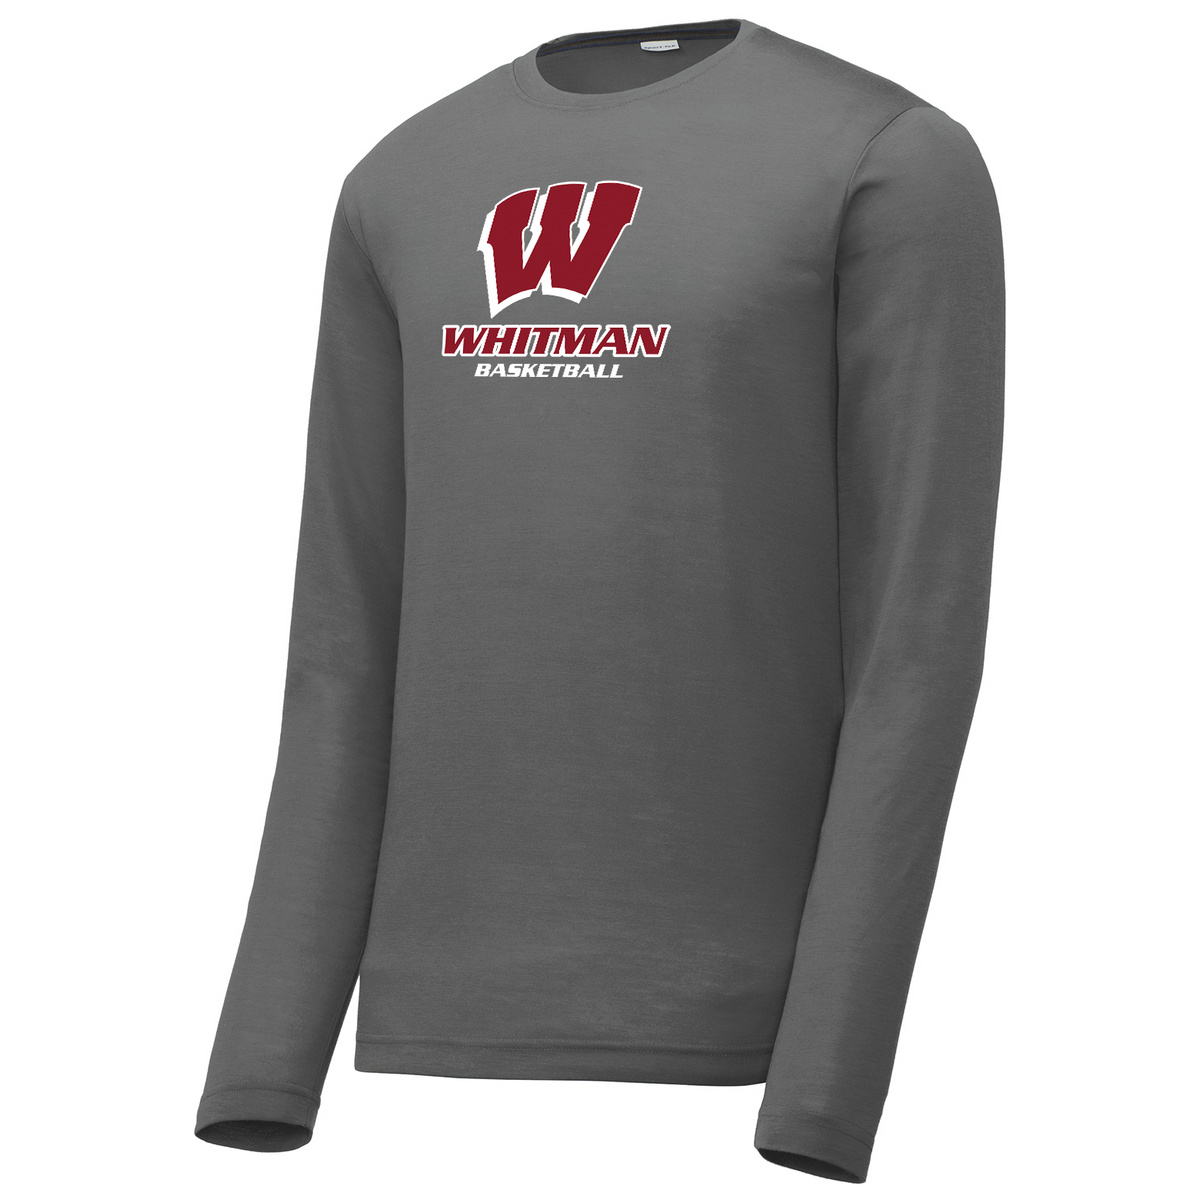 Whitman Basketball Long Sleeve CottonTouch Performance Shirt